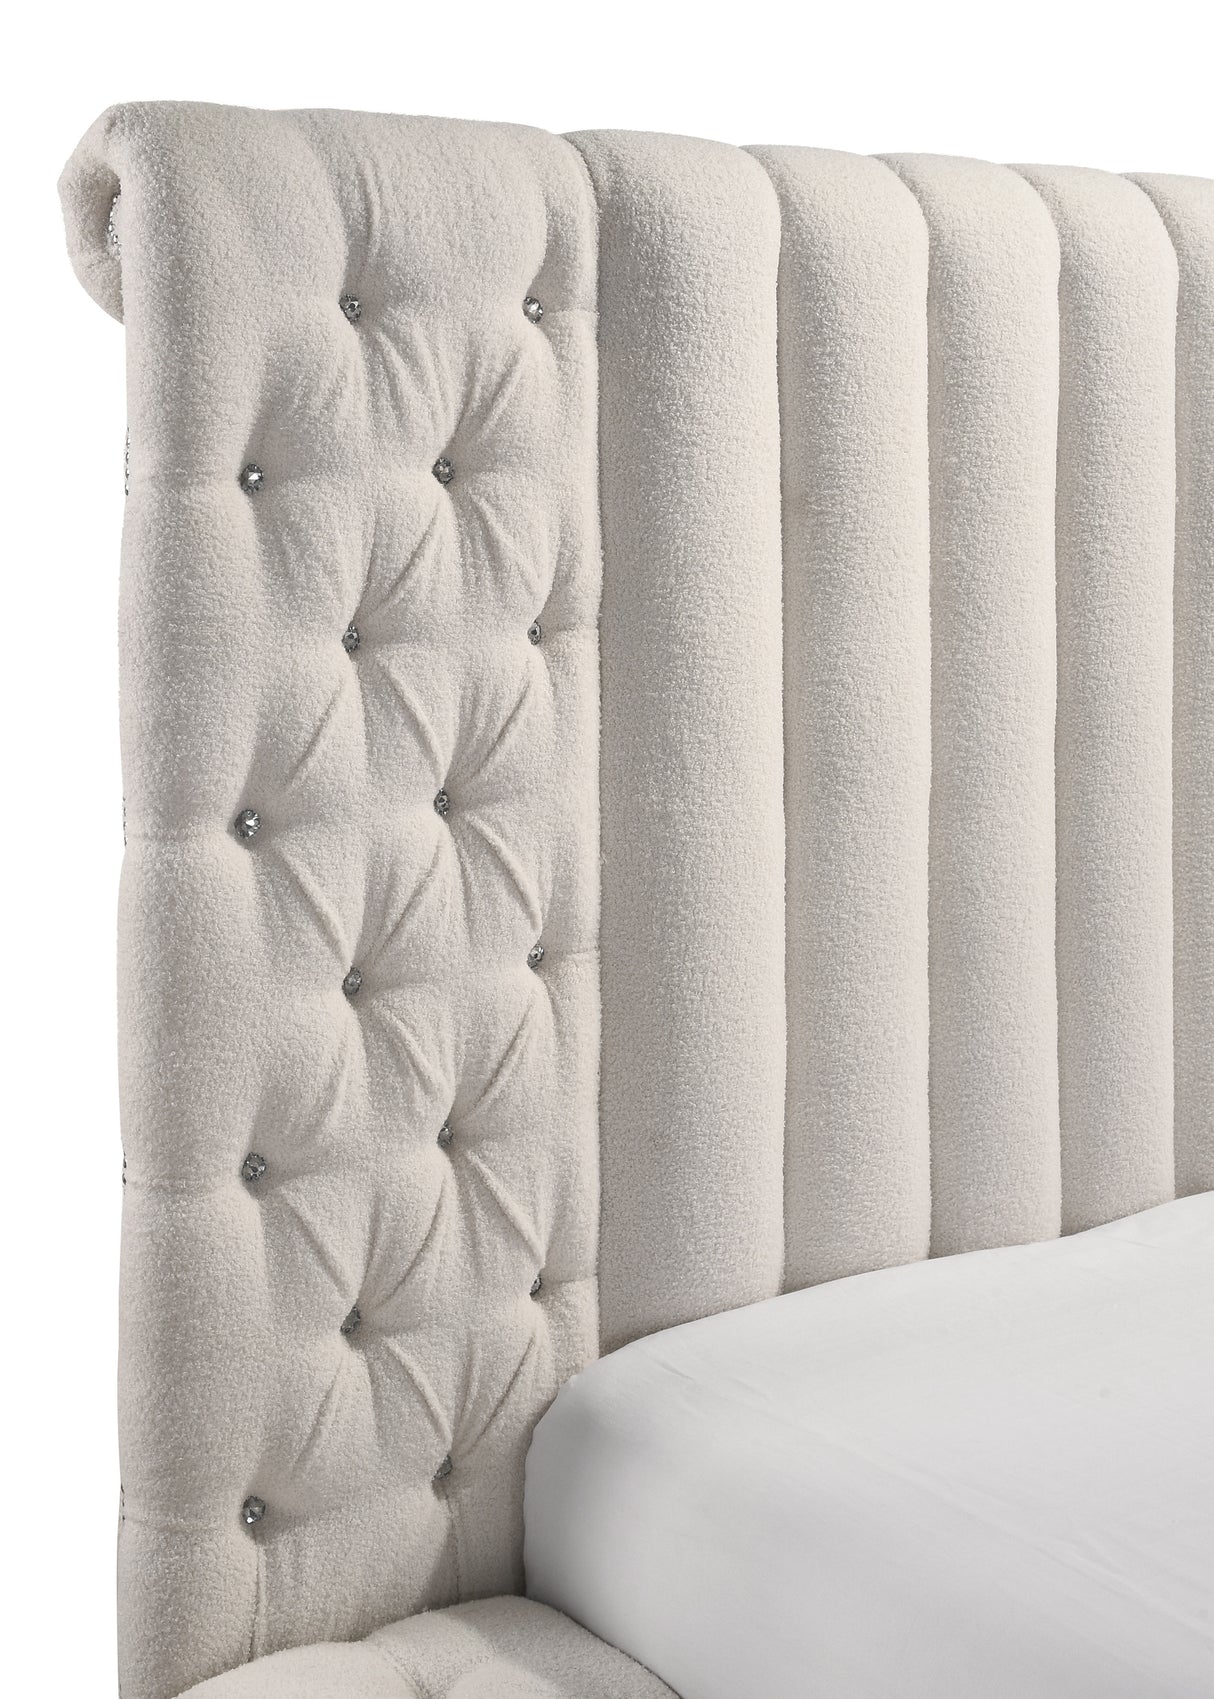 Danbury White Boucle King Upholstered Storage Panel Bed